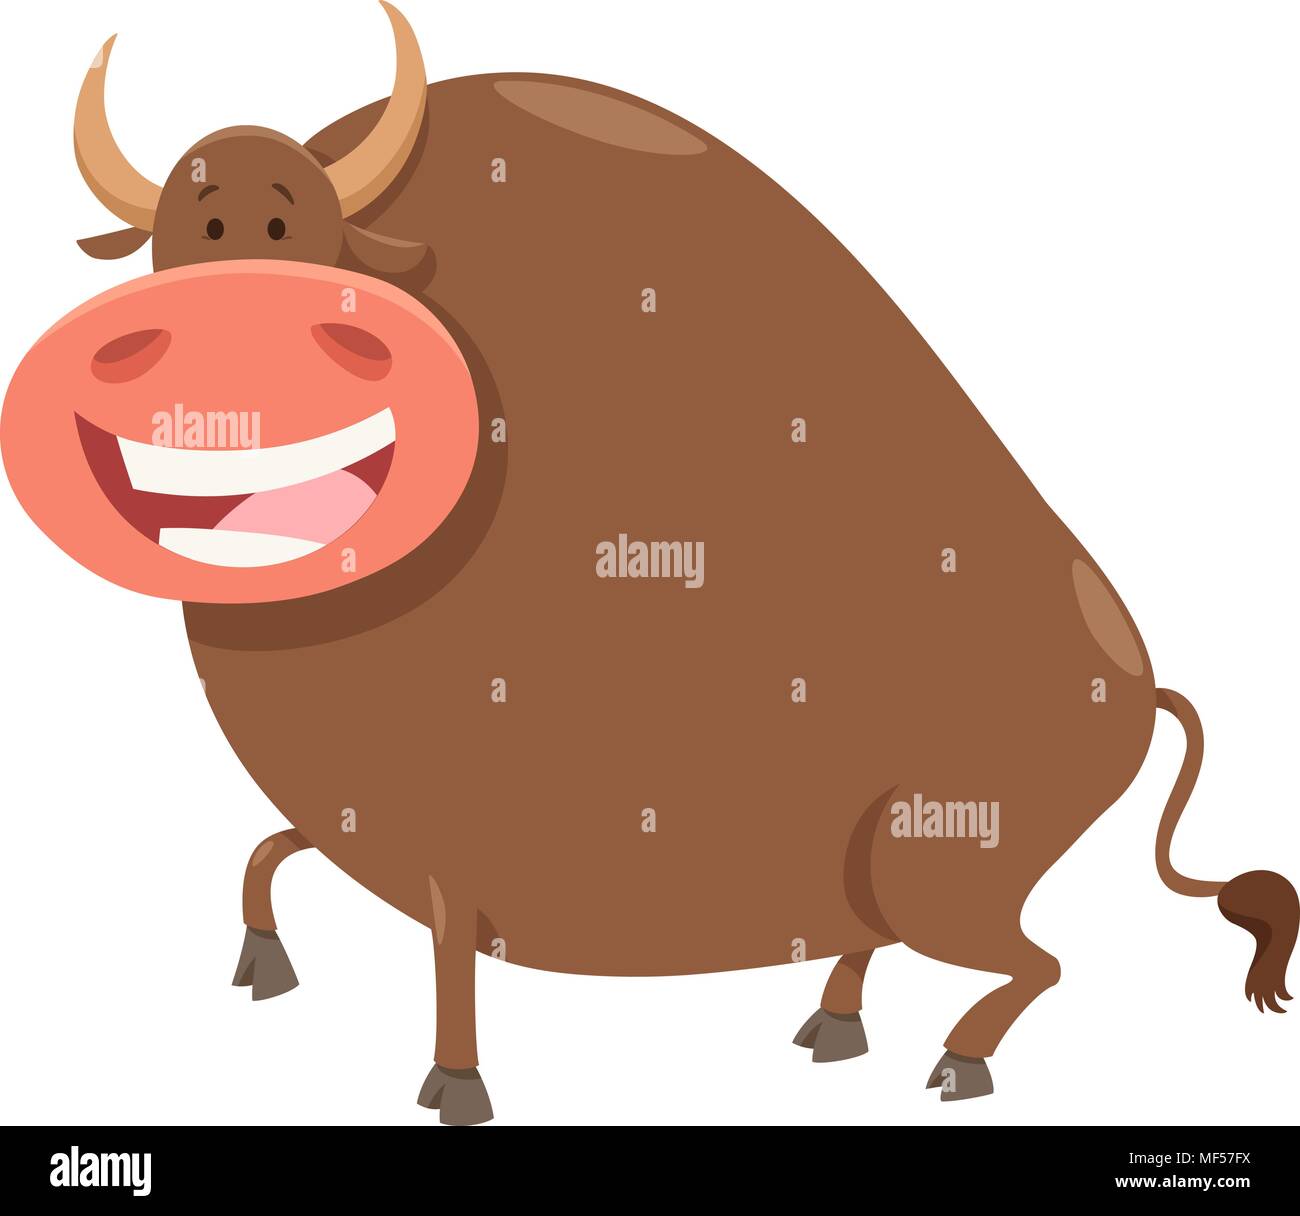 Cartoon Illustration of Funny Happy Bull Farm Animal Character Stock Vector